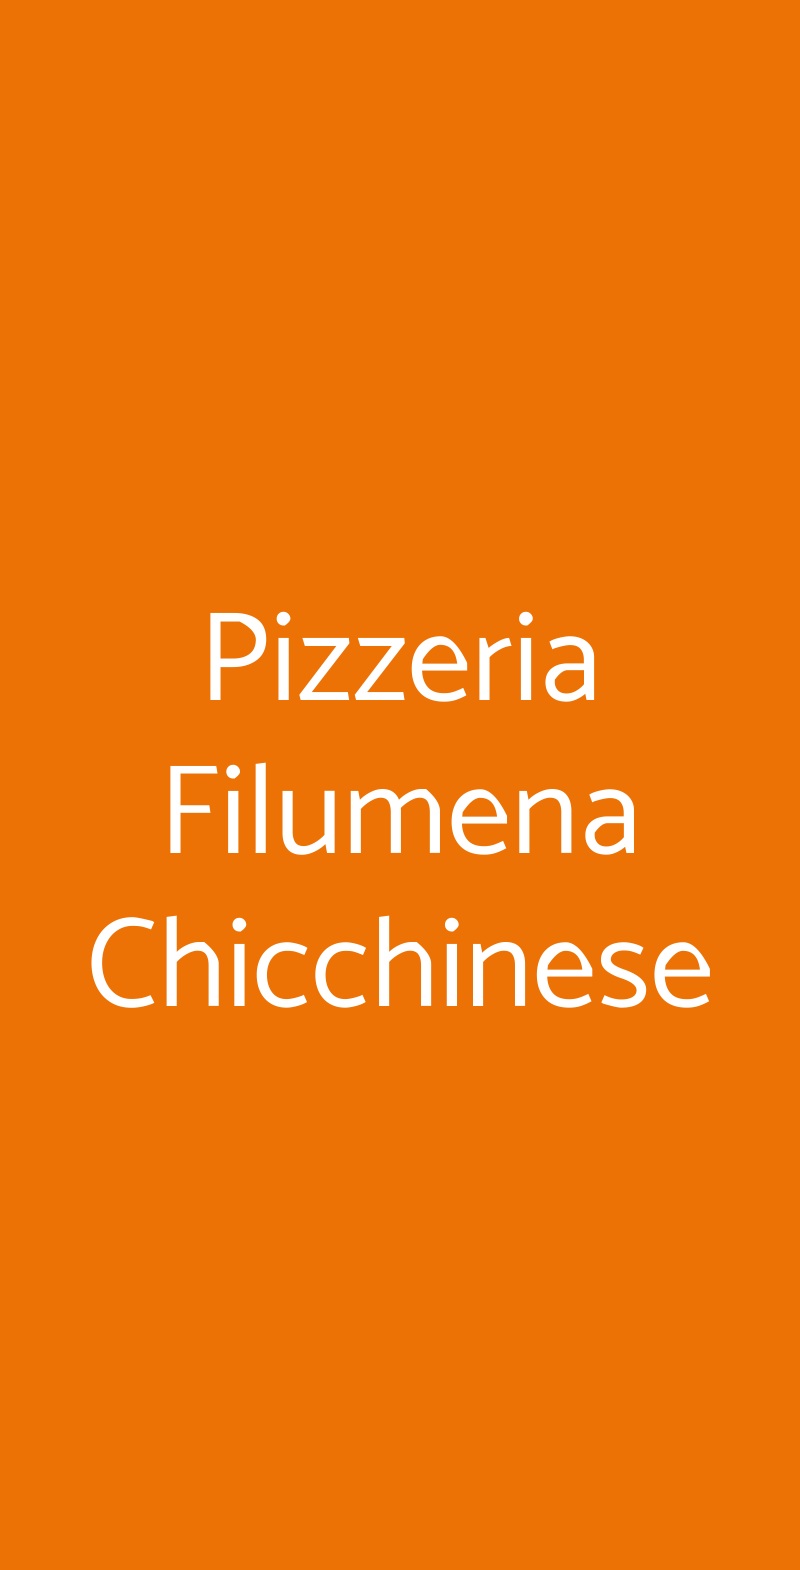 Pizzeria Filumena Chicchinese Napoli menù 1 pagina